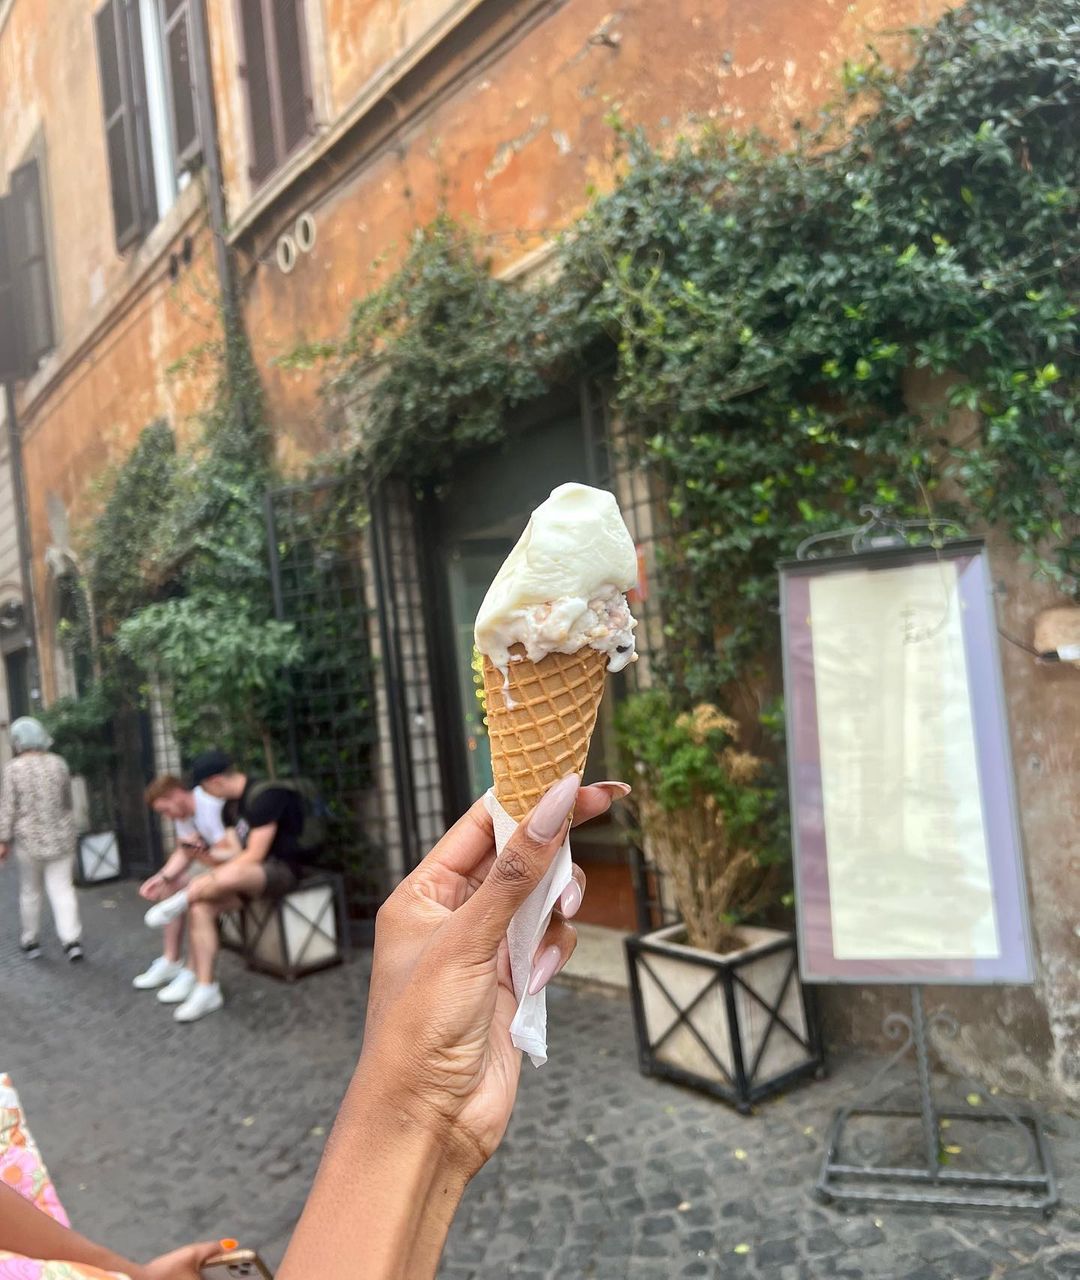 Zozibini Tunzi's hand holding ice cream in Italy